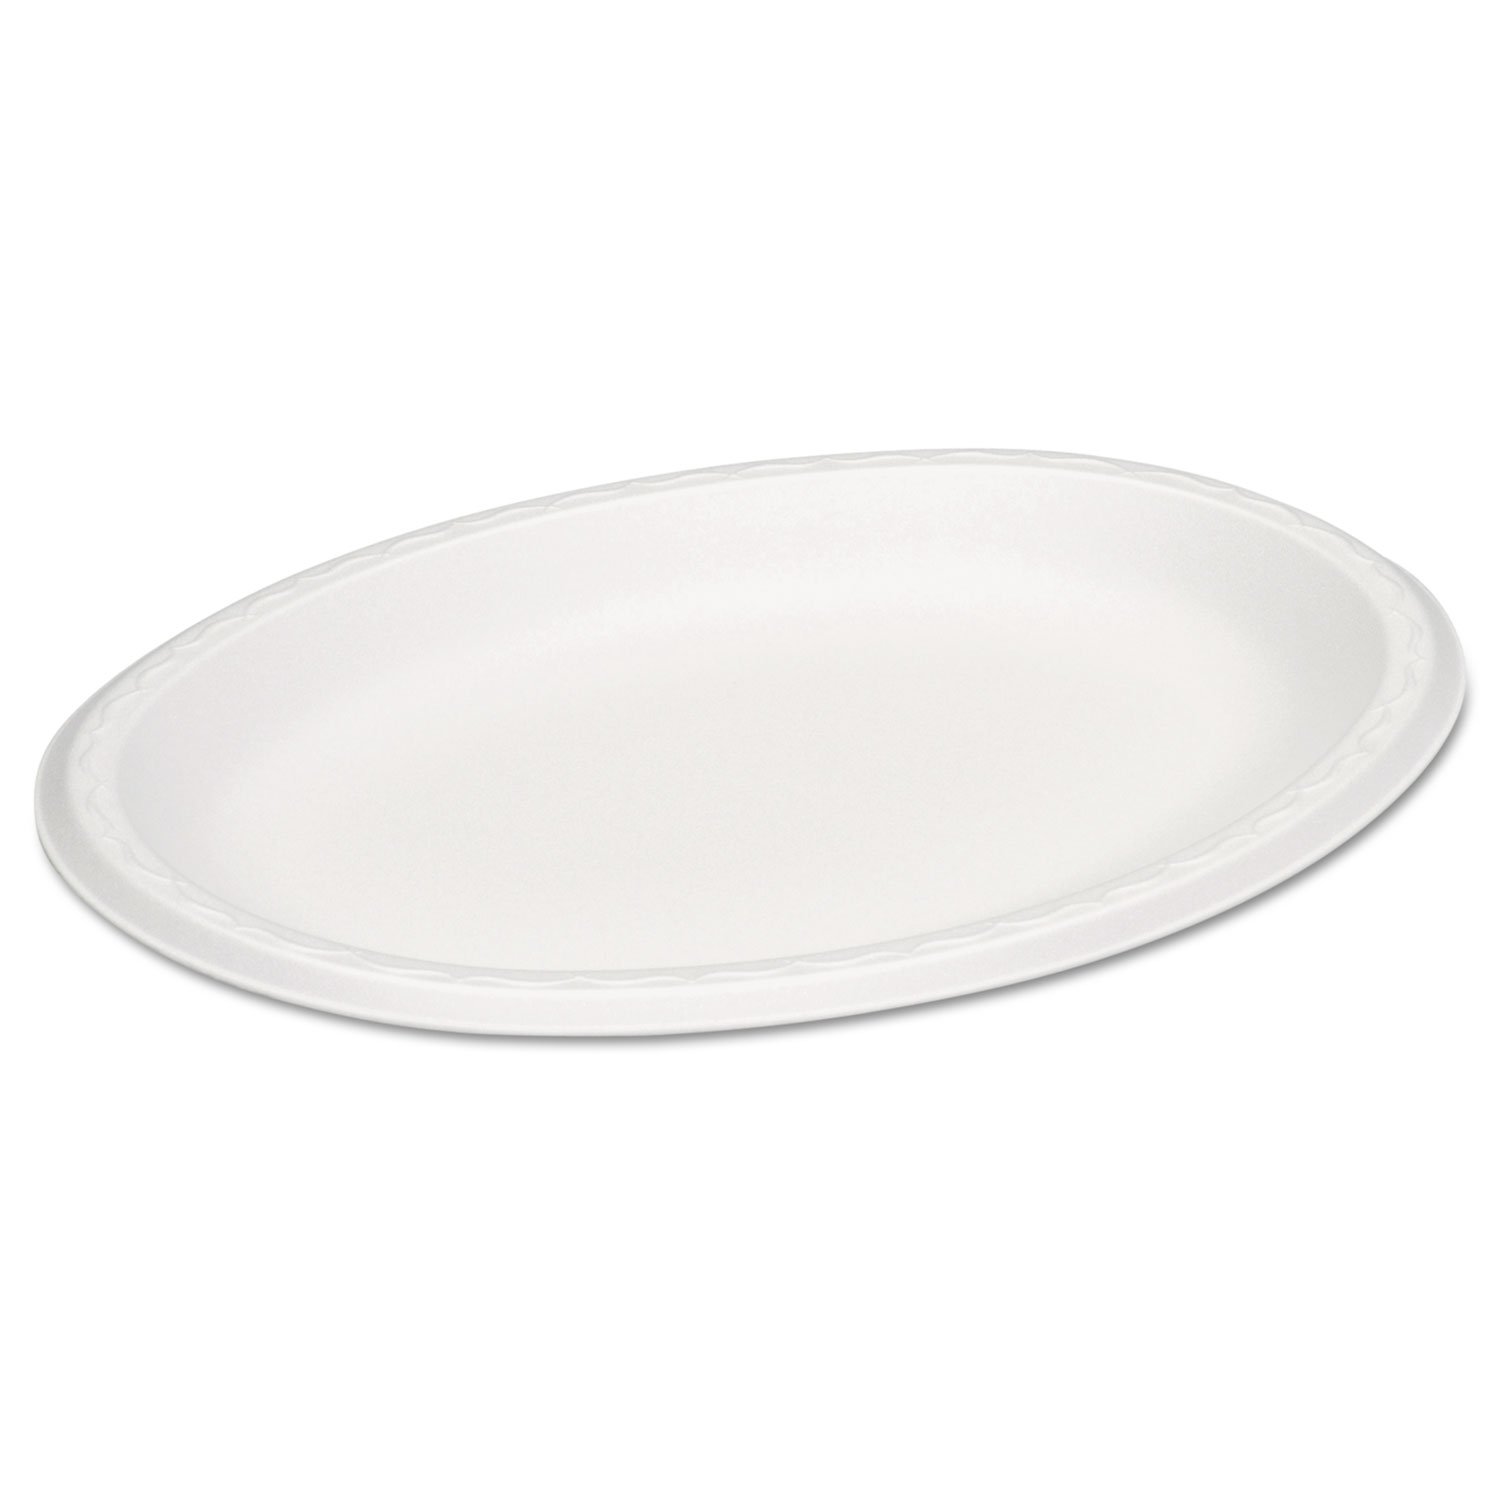  Genpak 81100--- Celebrity Foam Platters, 11.5 x 8.5, White, 125/PK, 4 PK/CT (GNP81100) 